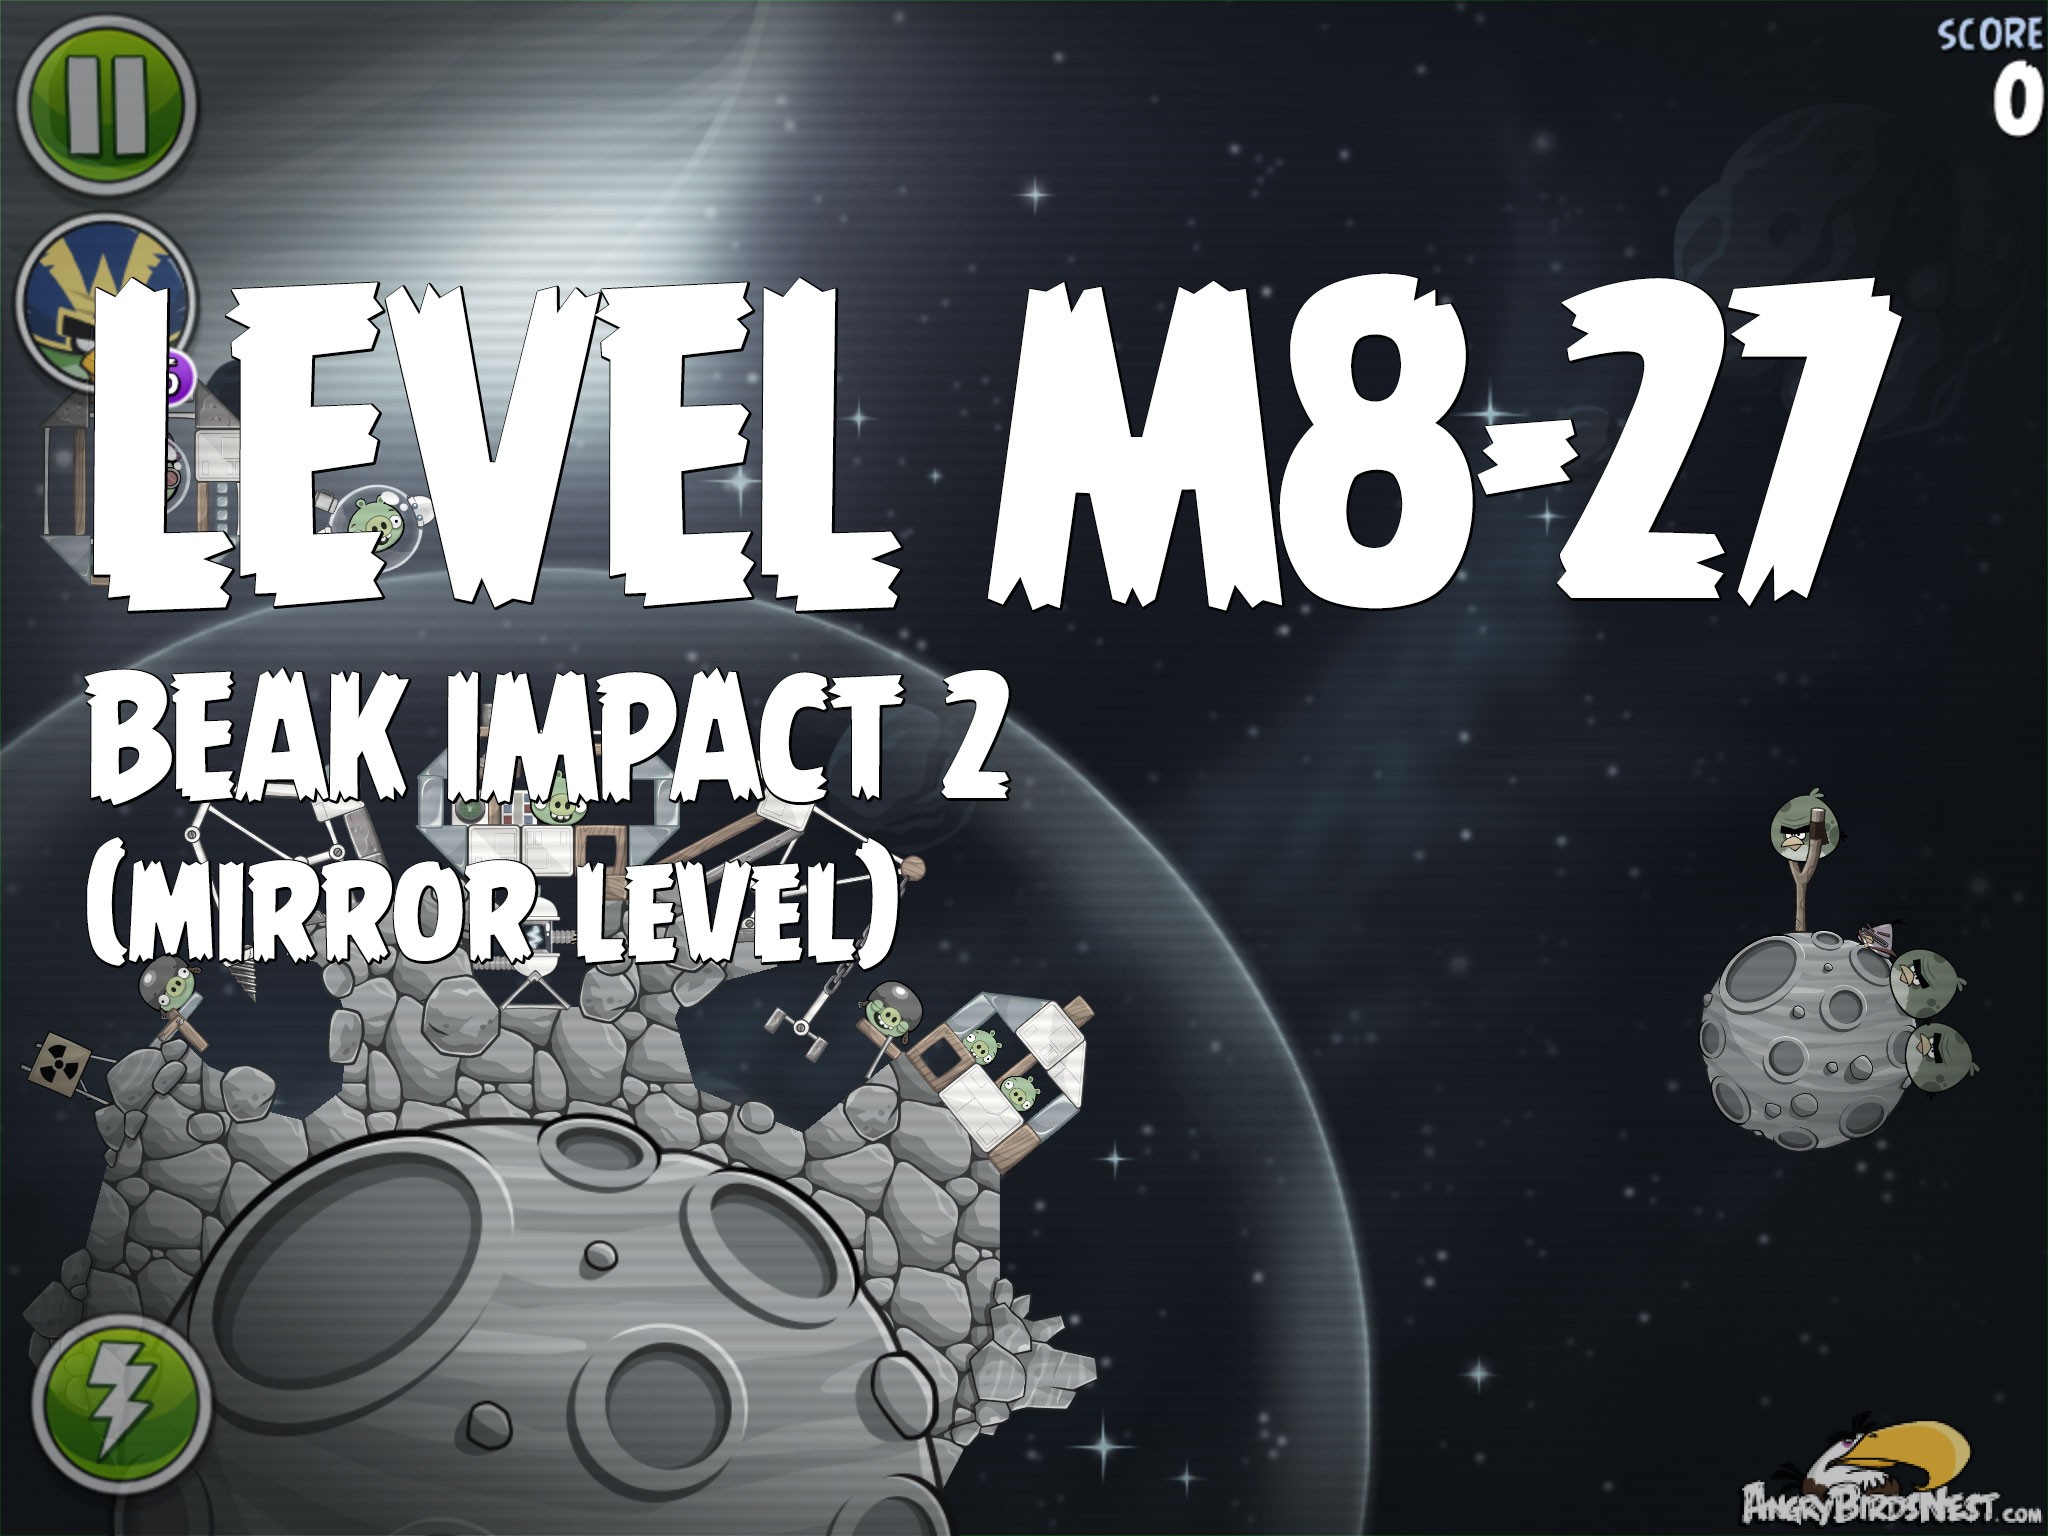 Angry Birds Space Beak Impact 2 Level M8-27